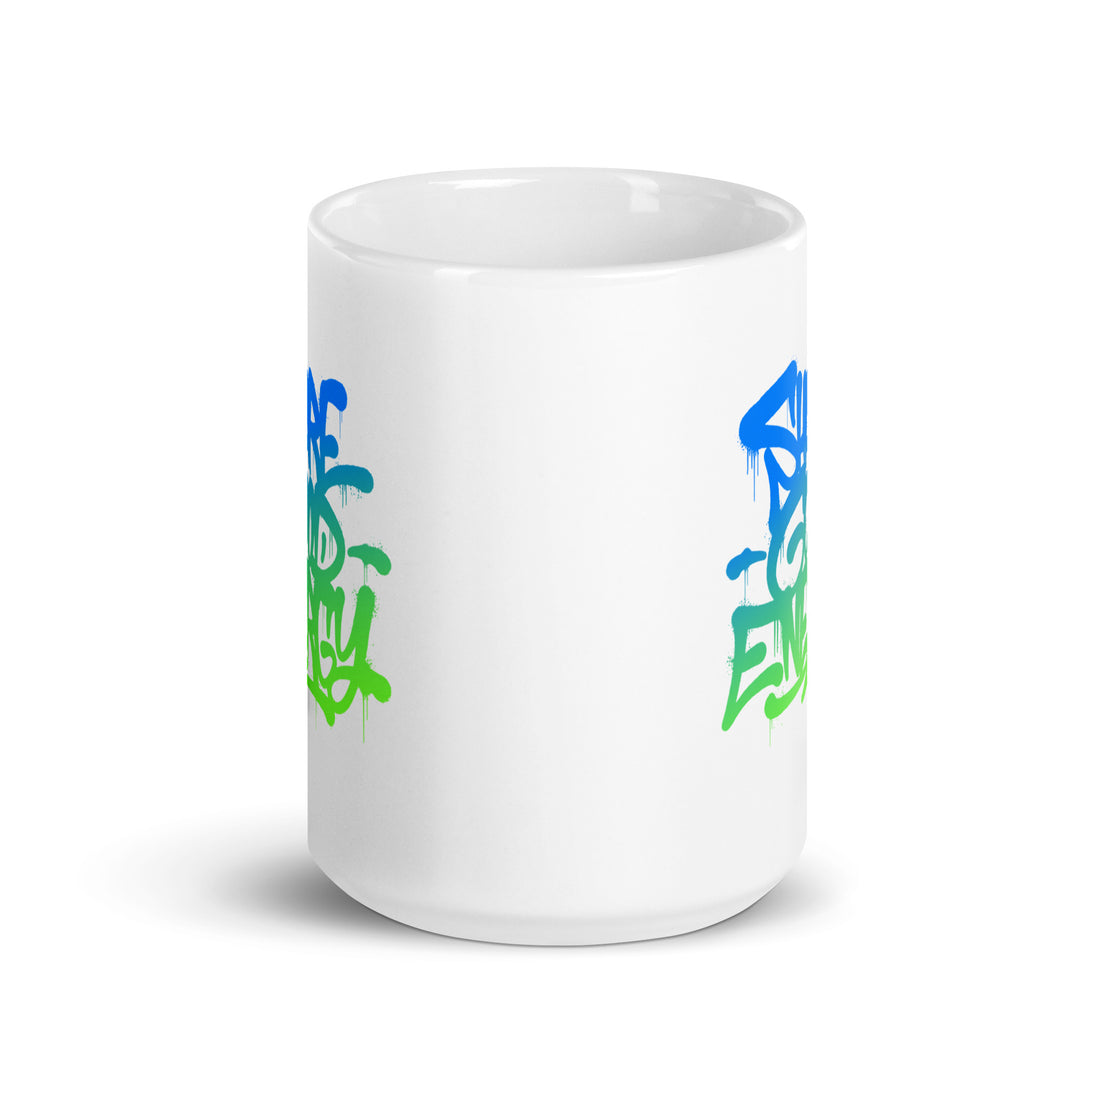 Share Good Energy Drip - White glossy mug